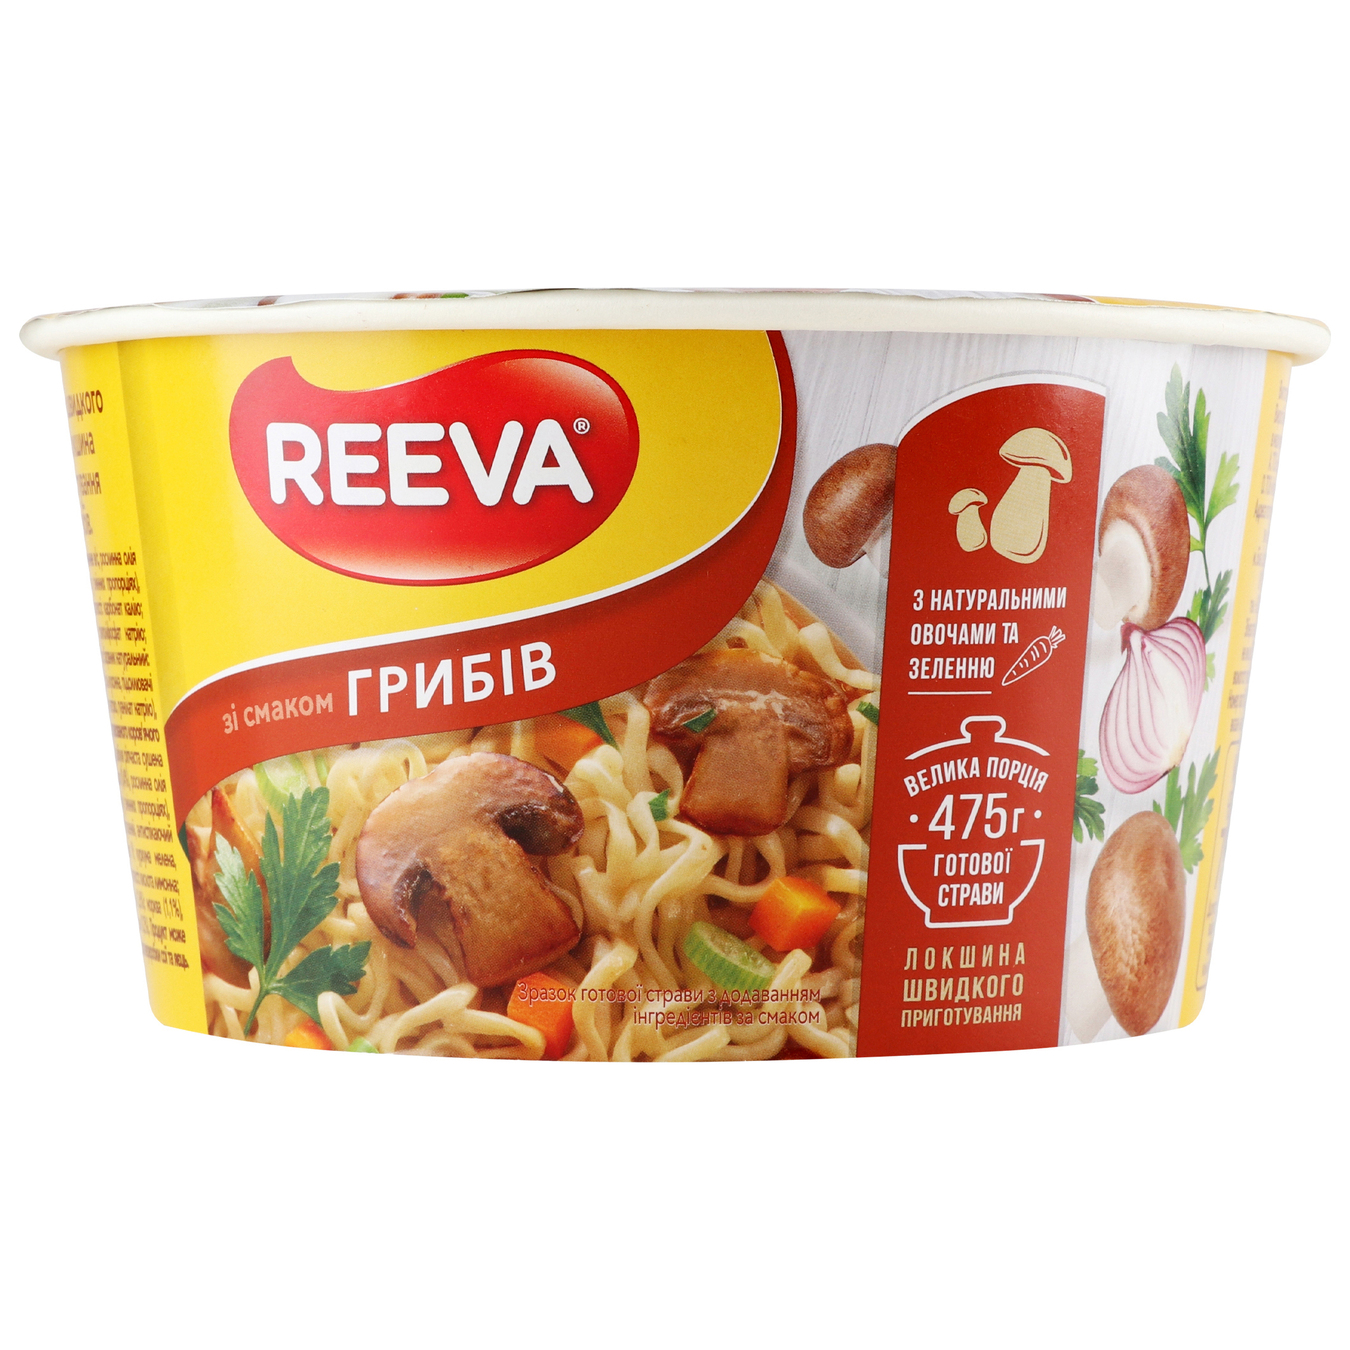 Instant Reeva noodles with mushroom flavor 75g